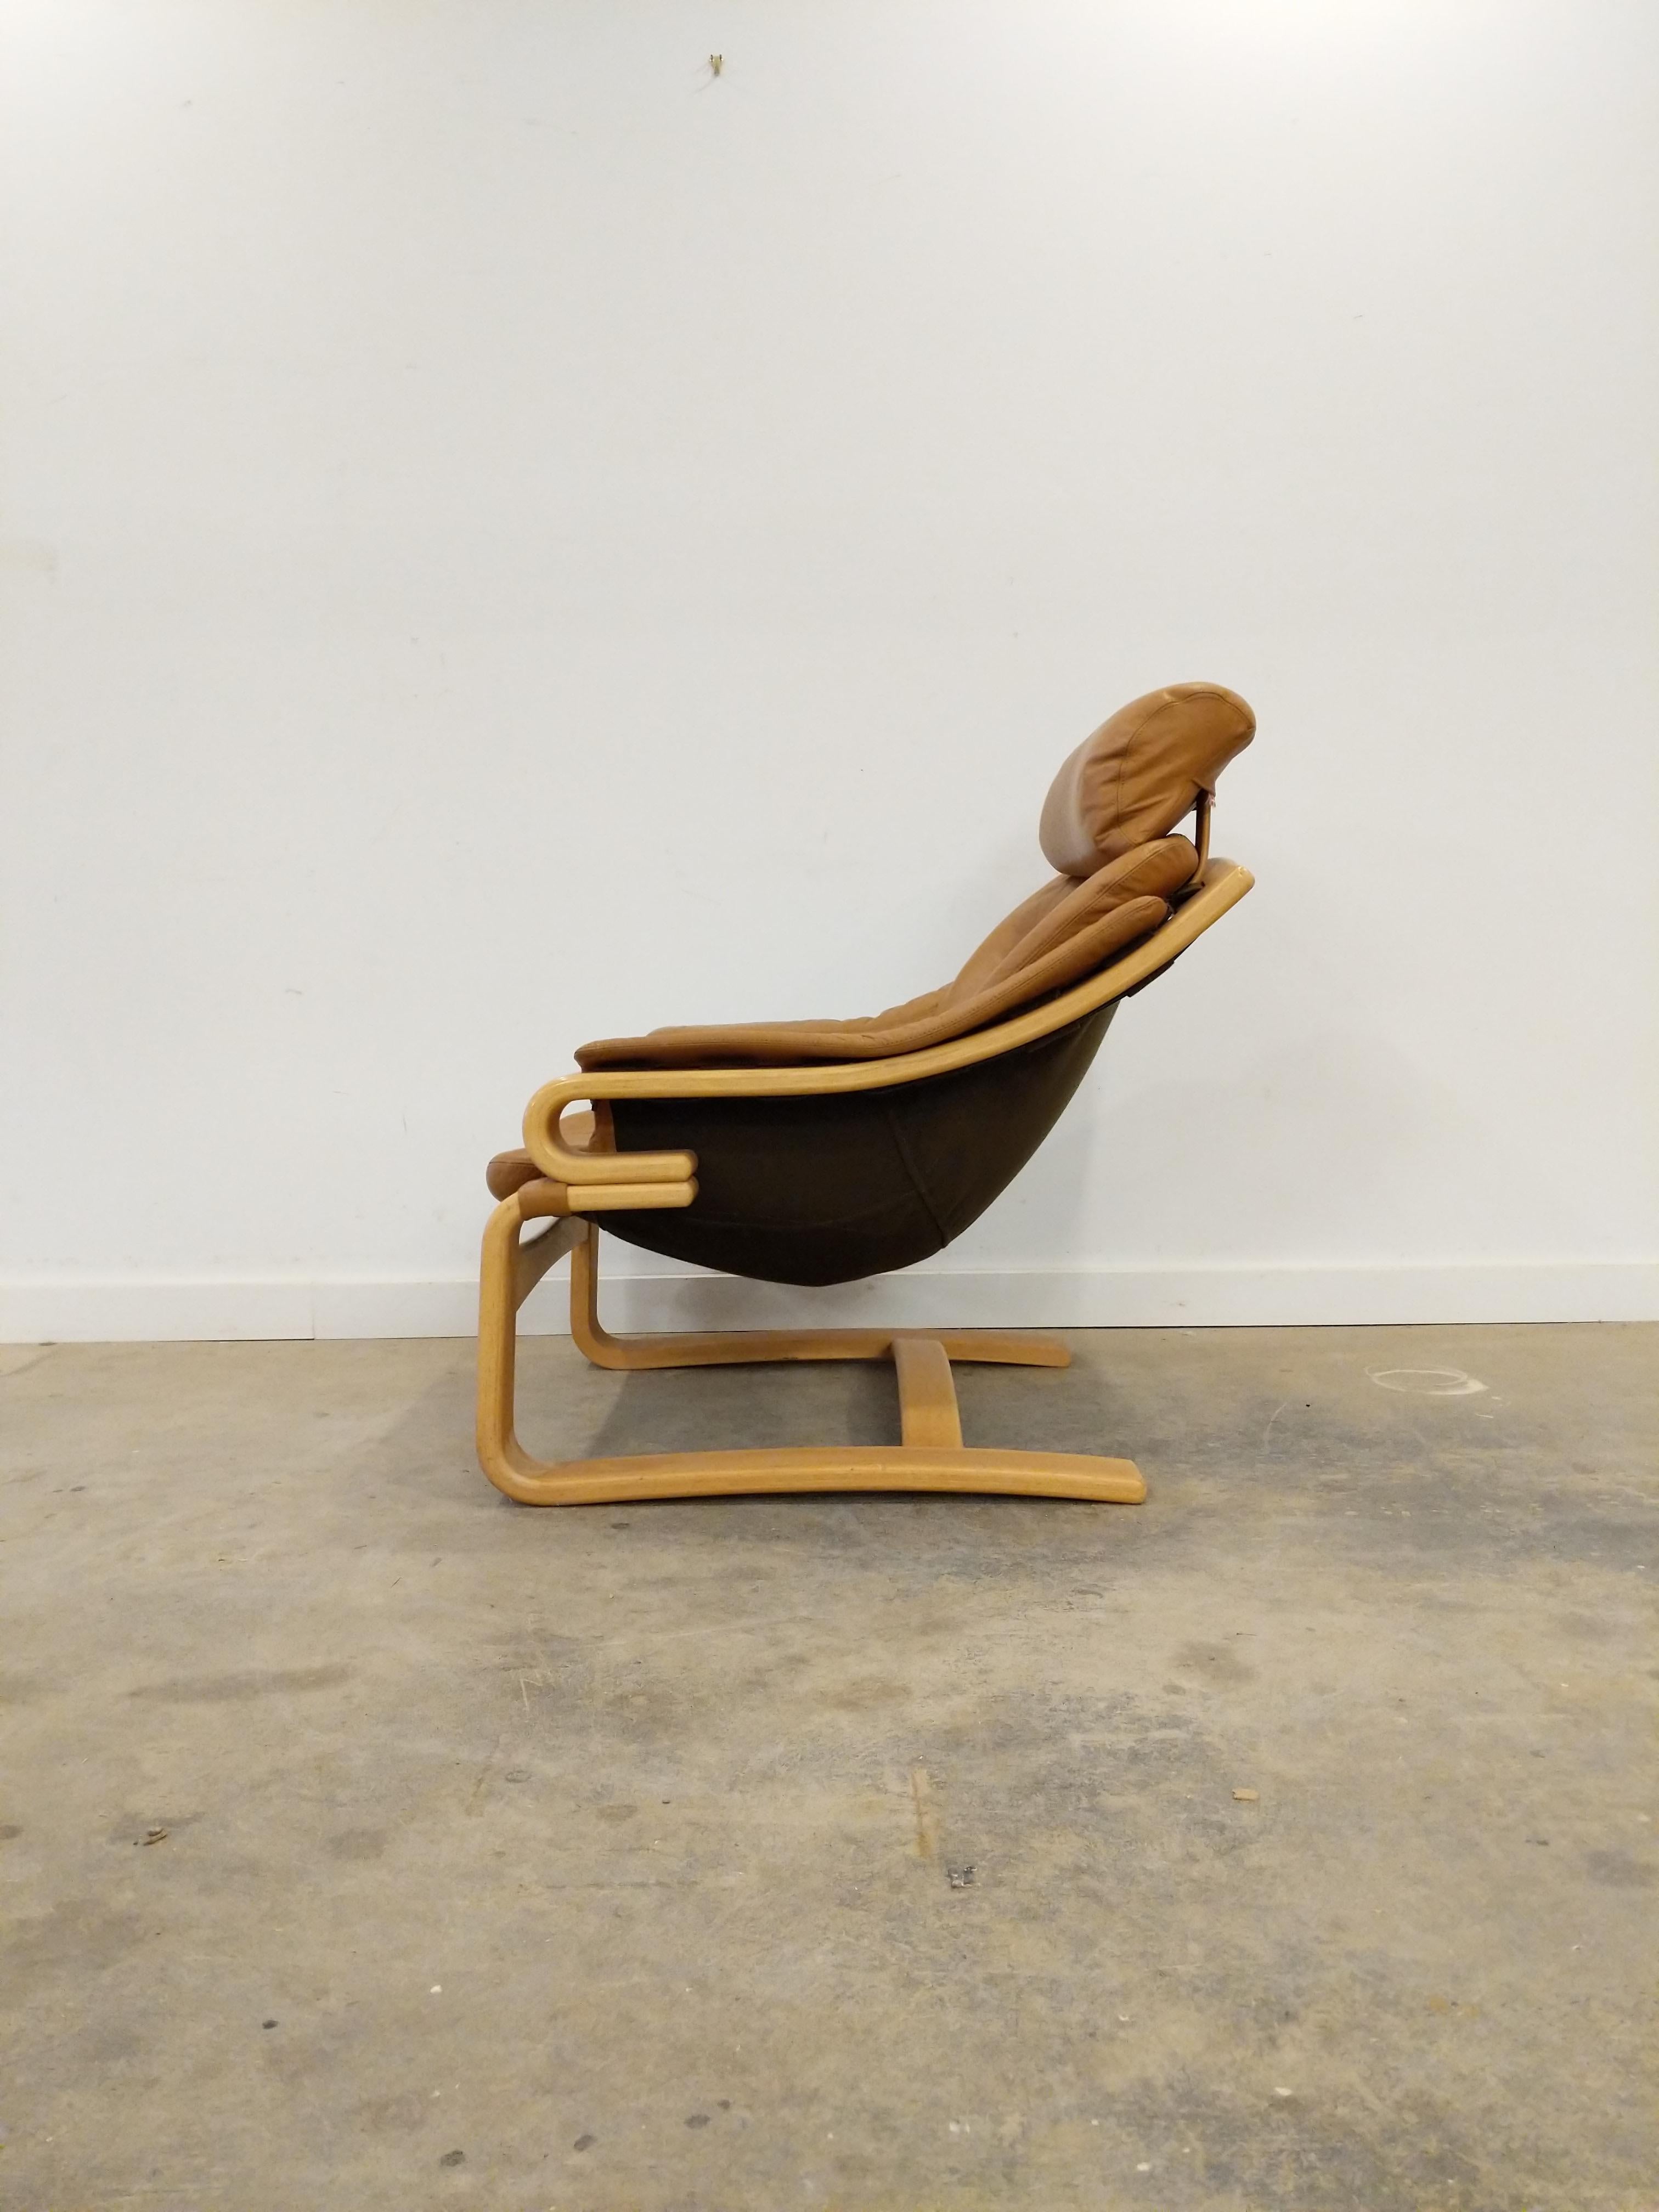 Authentic vintage mid century Danish / Scandinavian Modern lounge chair.

